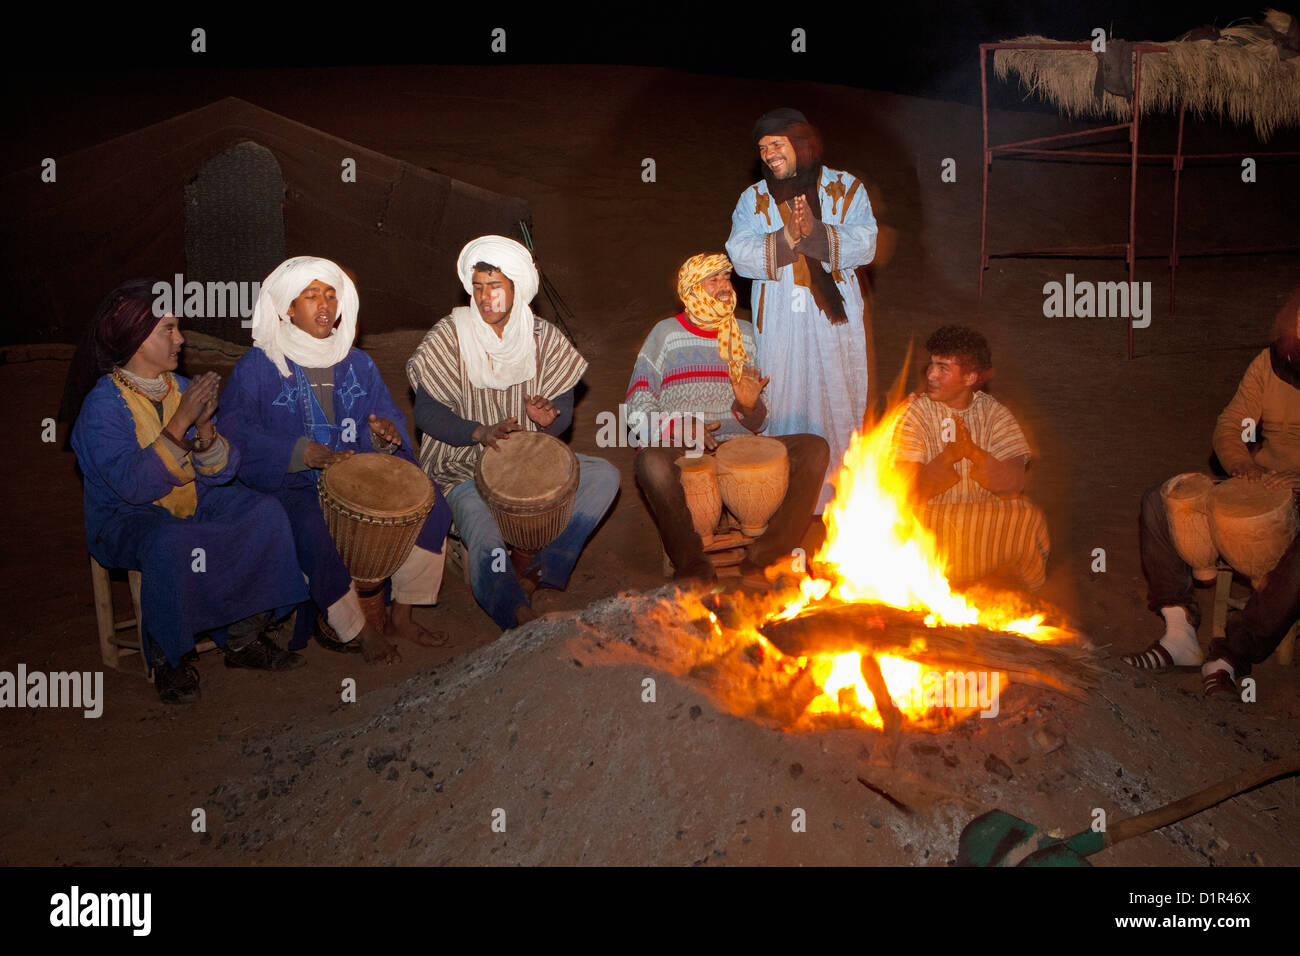 Morocco, M'Hamid, Erg Chigaga. Sahara desert. Tourist camp, bivouac. Local Berber people making music around fireplace. Stock Photo